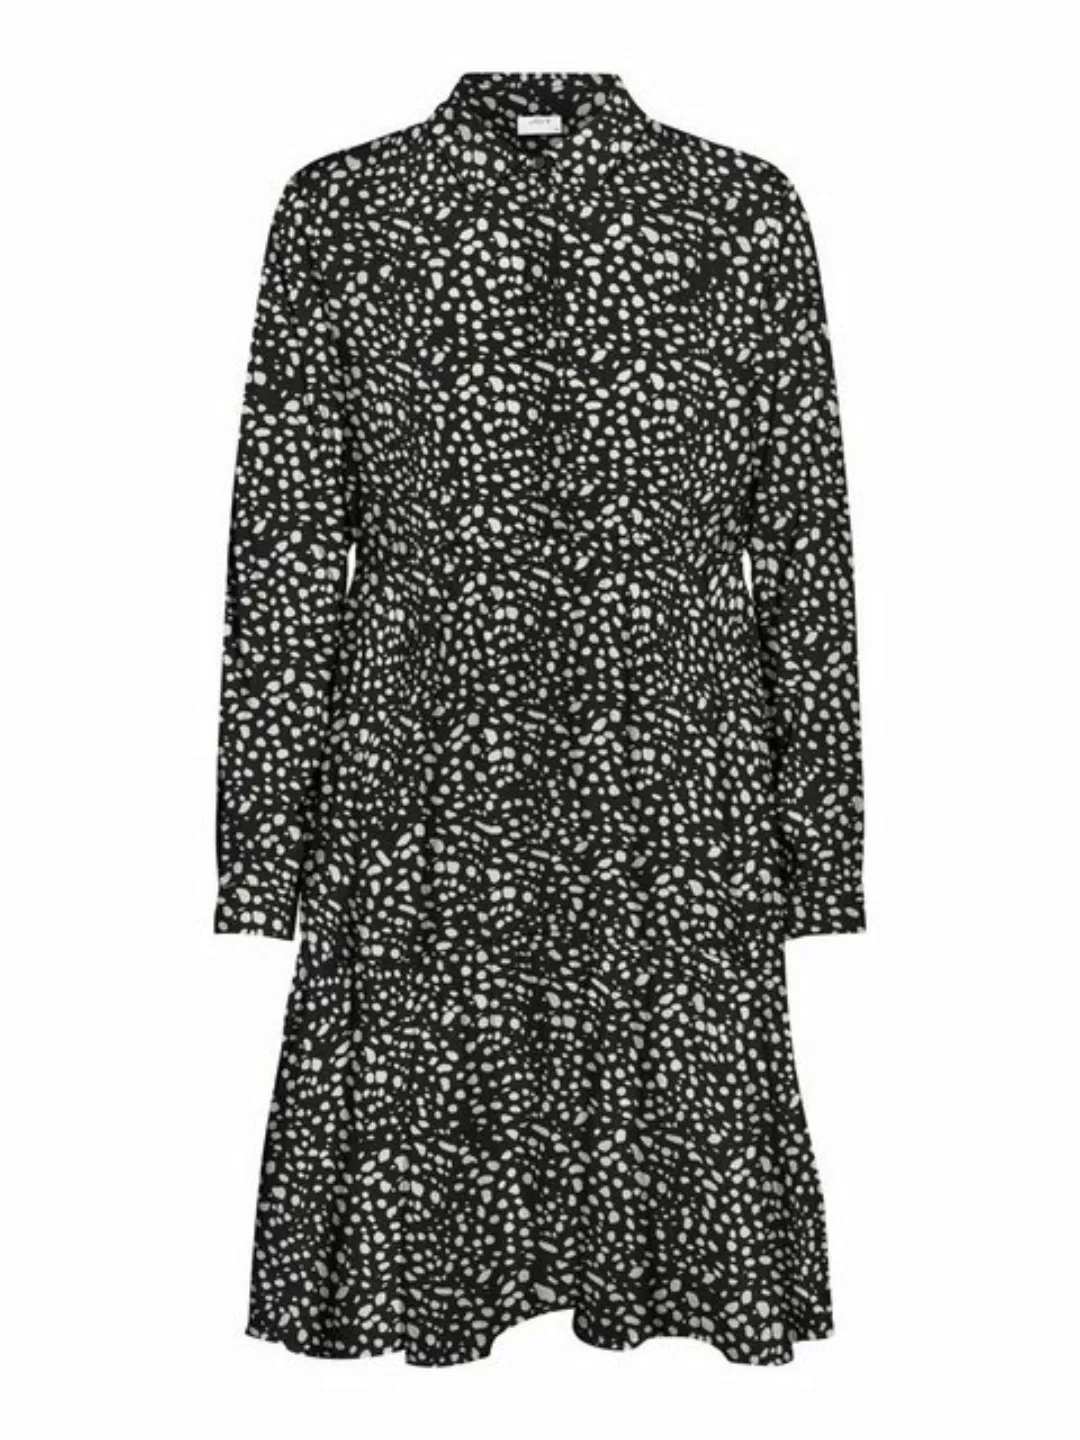 JACQUELINE de YONG Shirtkleid Kurzes Langarm Kleid Gemusterte Tunika Bluse günstig online kaufen